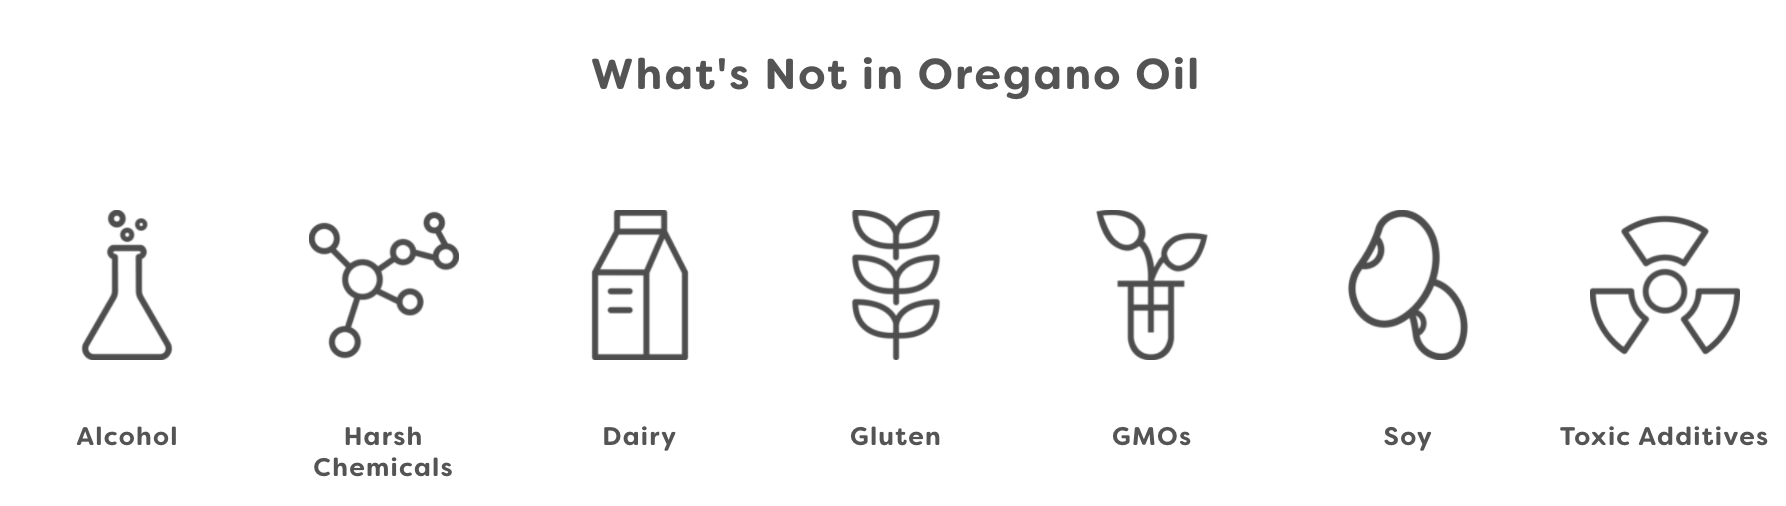 What's not in Oregano Oil?